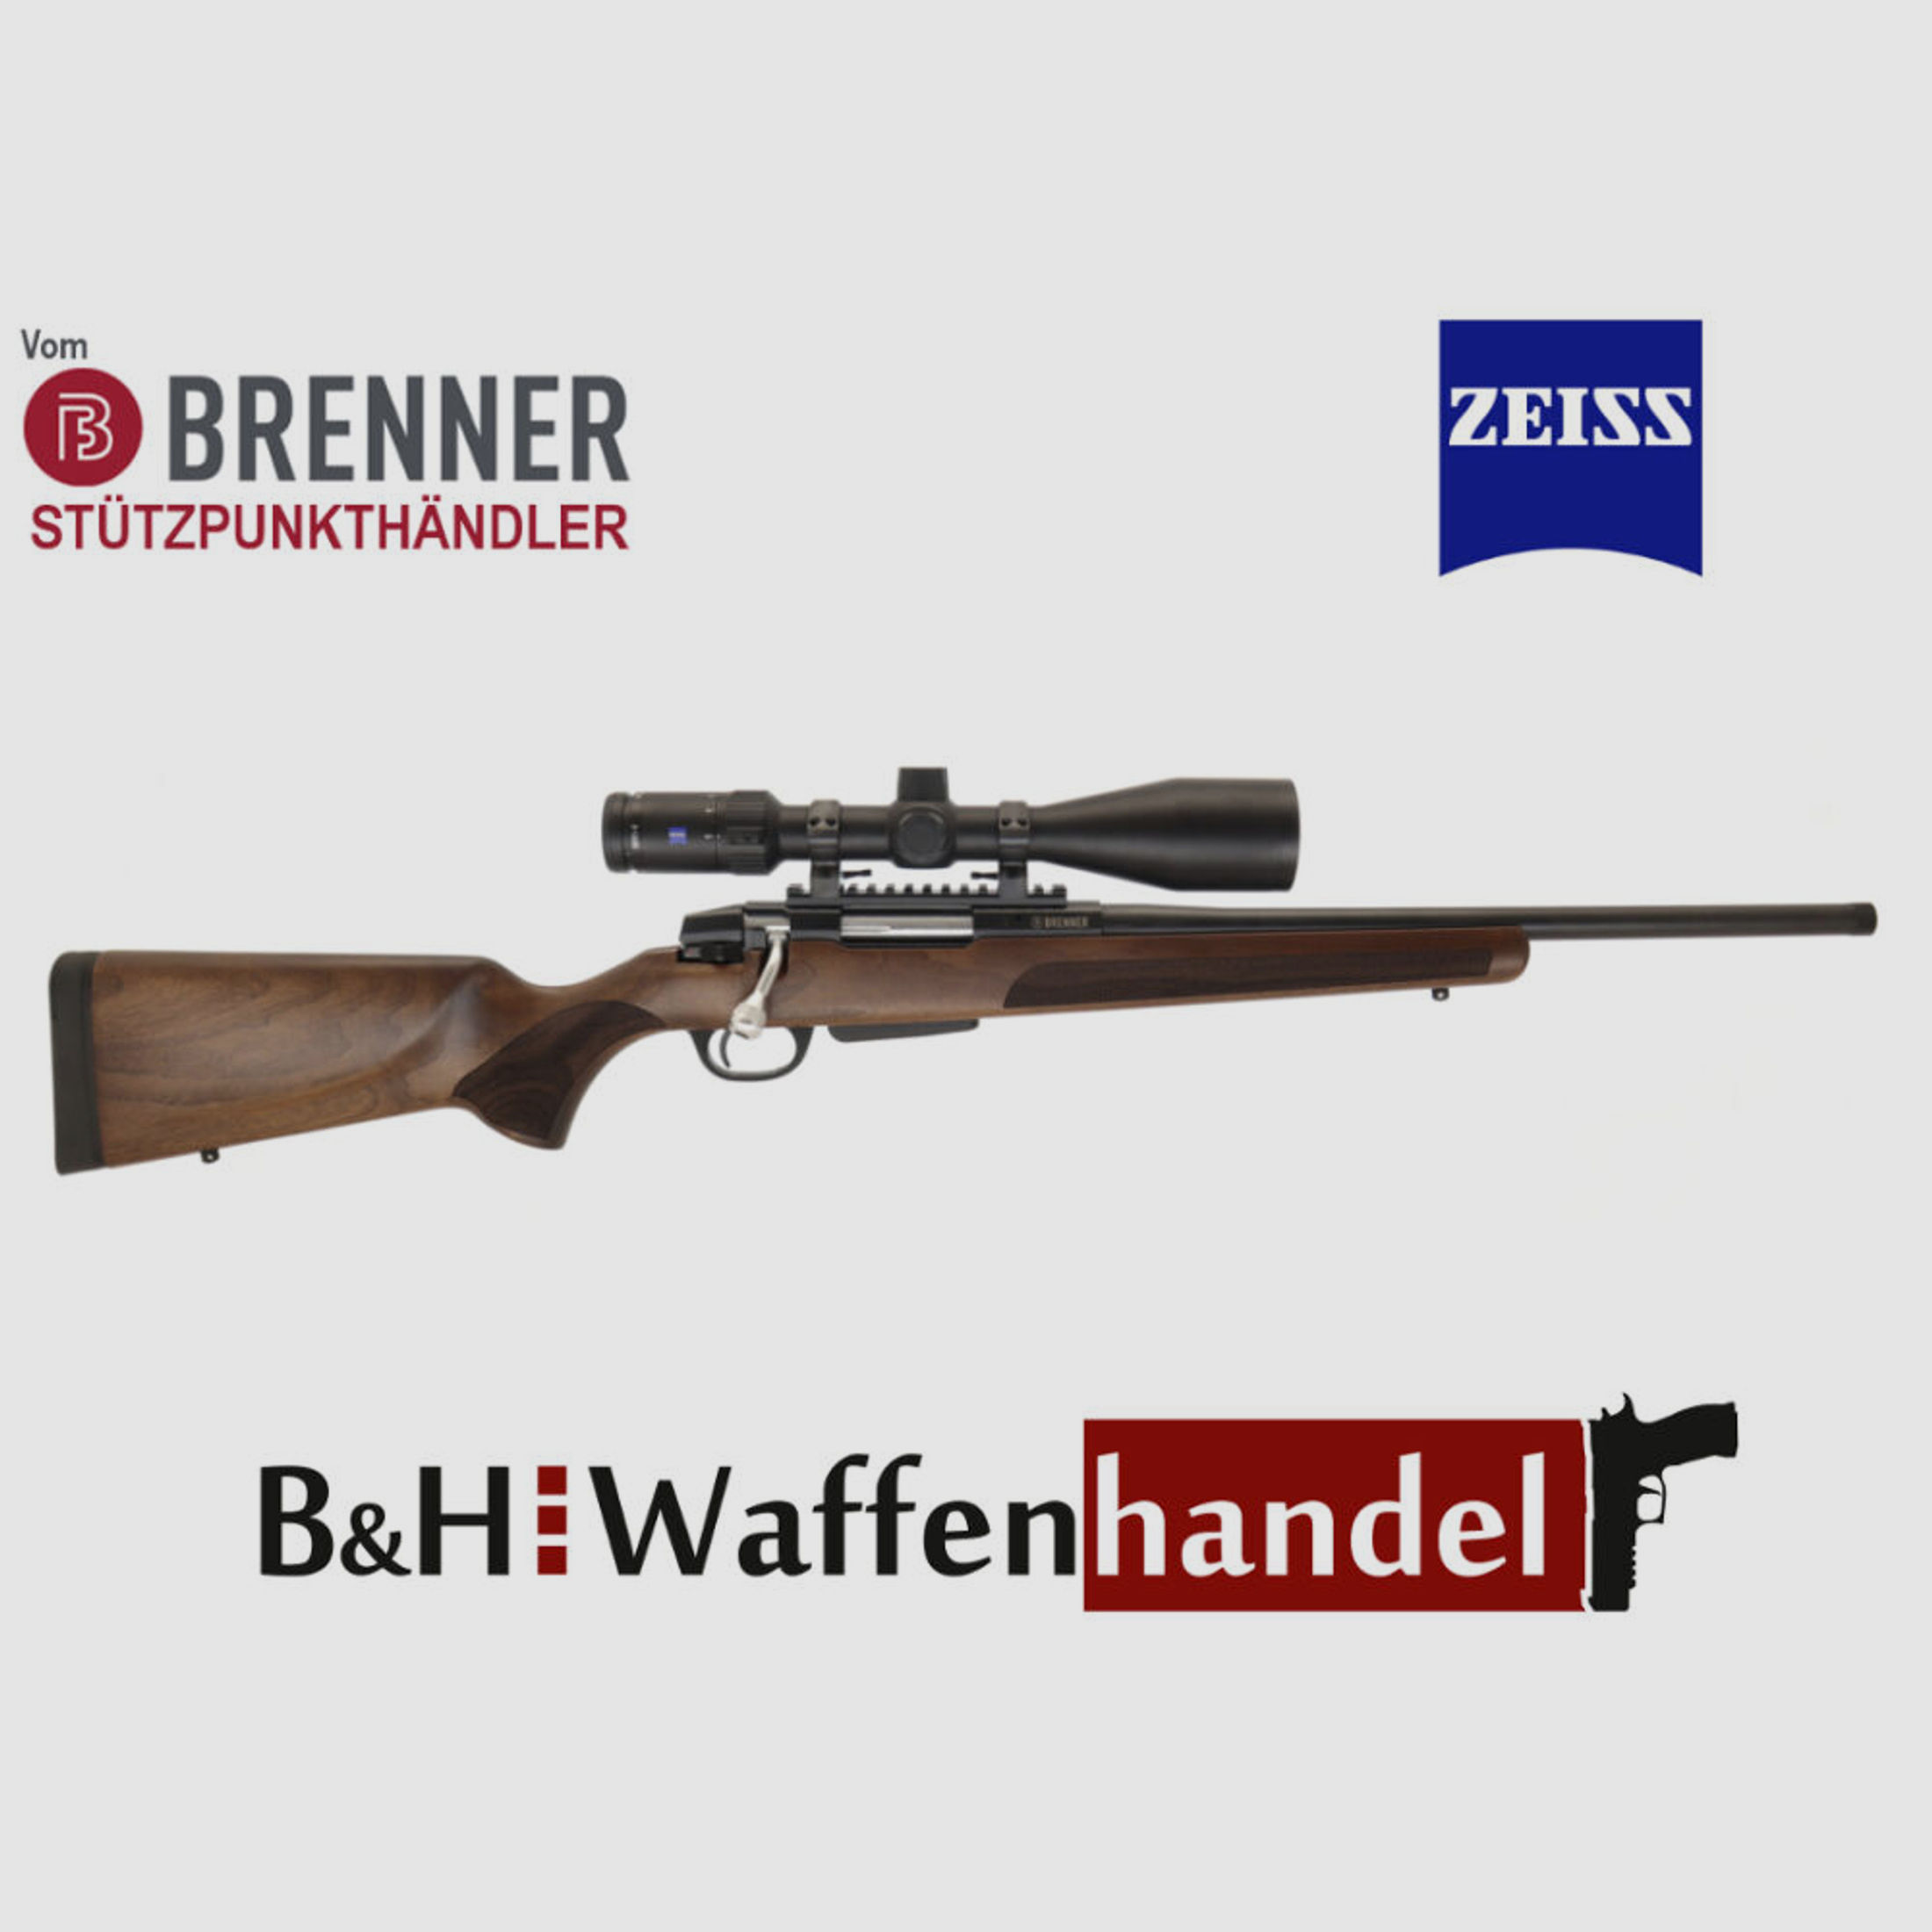 Brenner Komplettpaket:	 Brenner BR20 Walnuss mit Zeiss V4 3-12x56